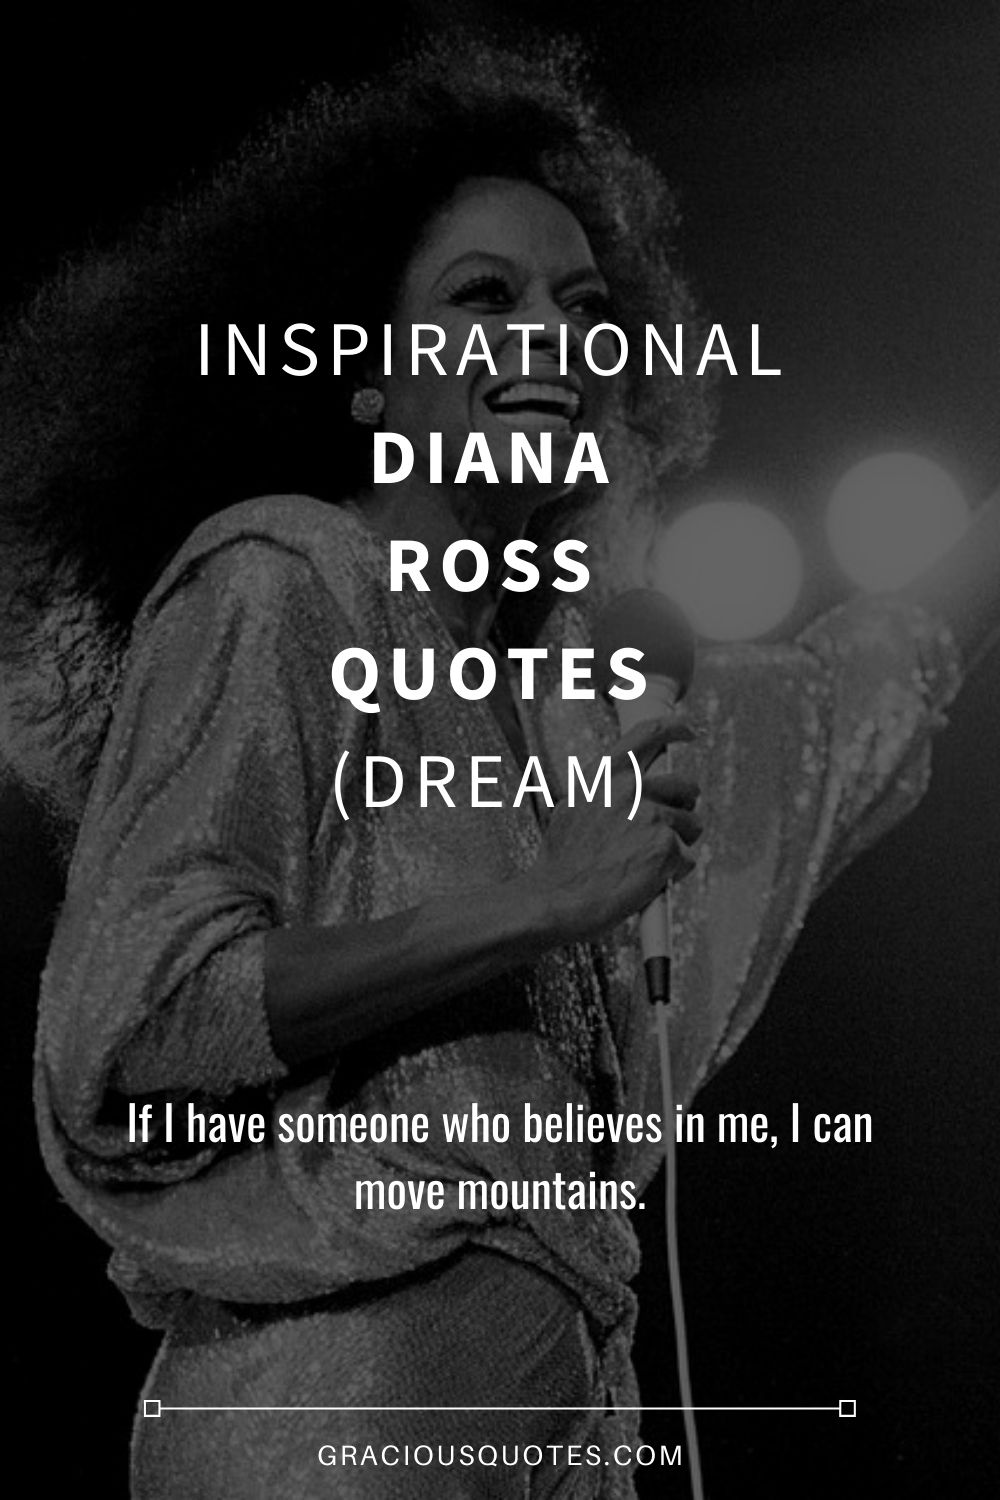 Inspirational Diana Ross Quotes (DREAM) - Gracious Quotes